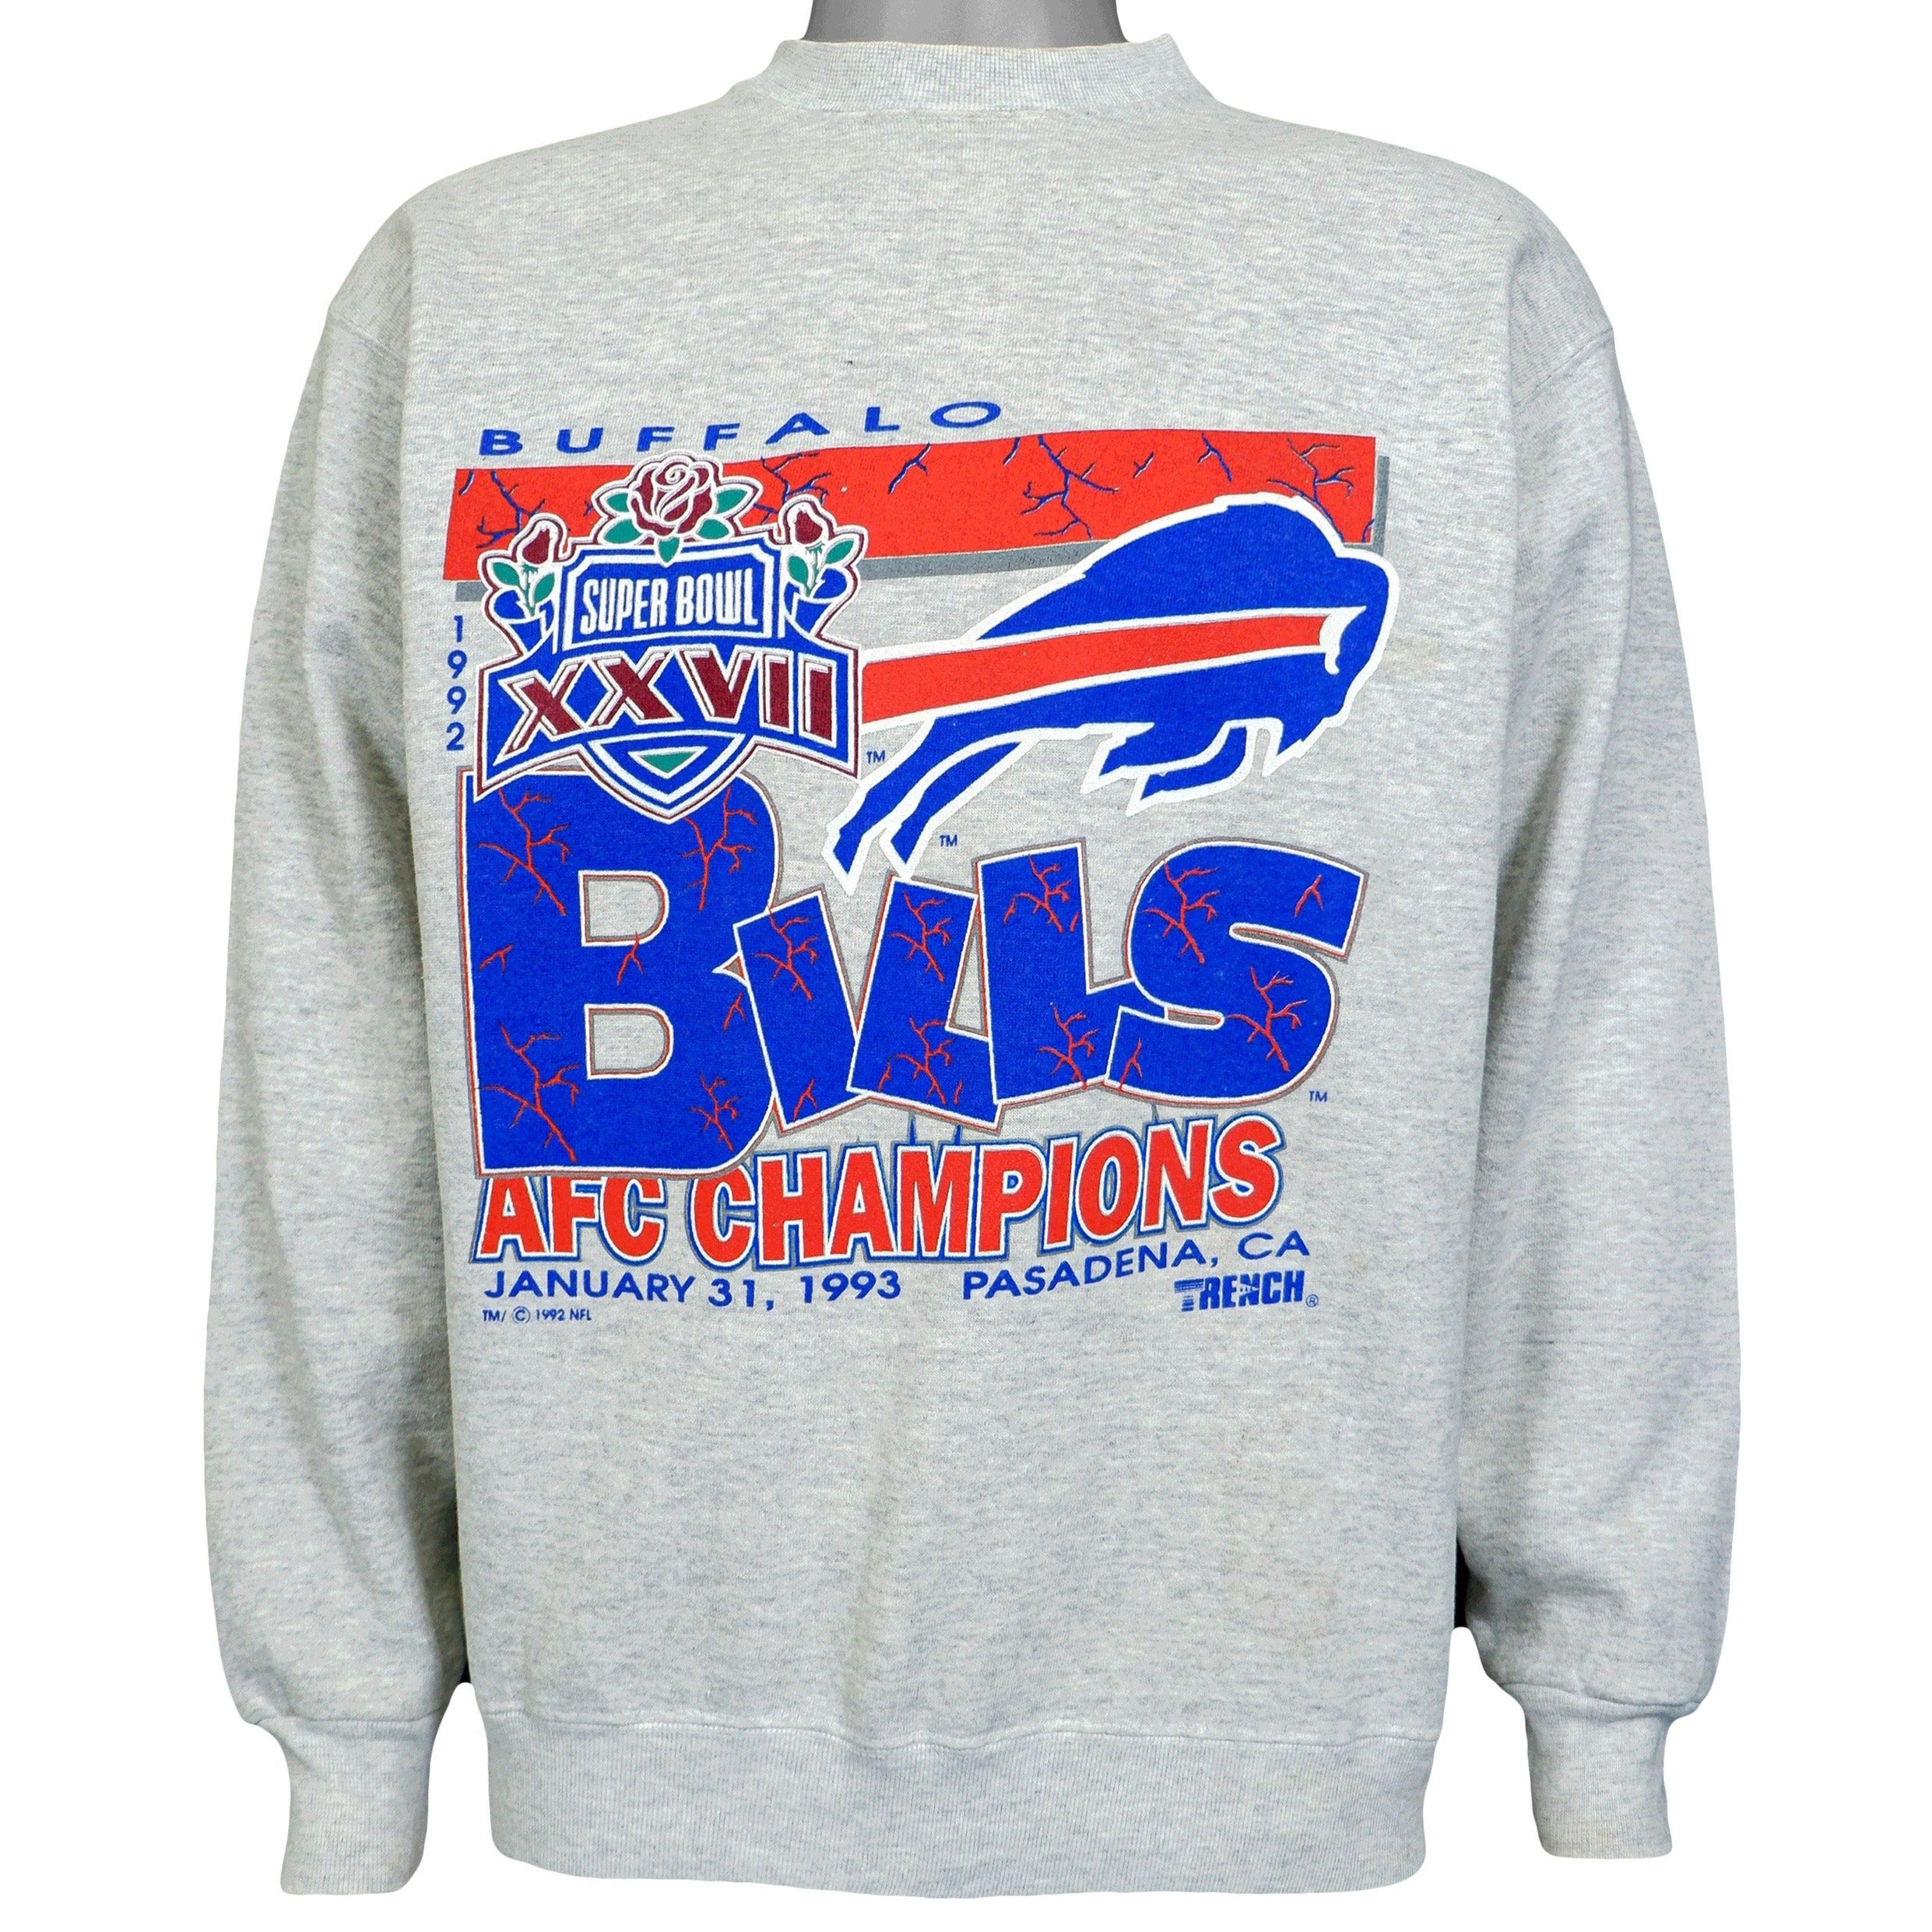 Vintage NFL - Buffalo 'Bills' Super Bowl XXVII Sweatshirt 1993